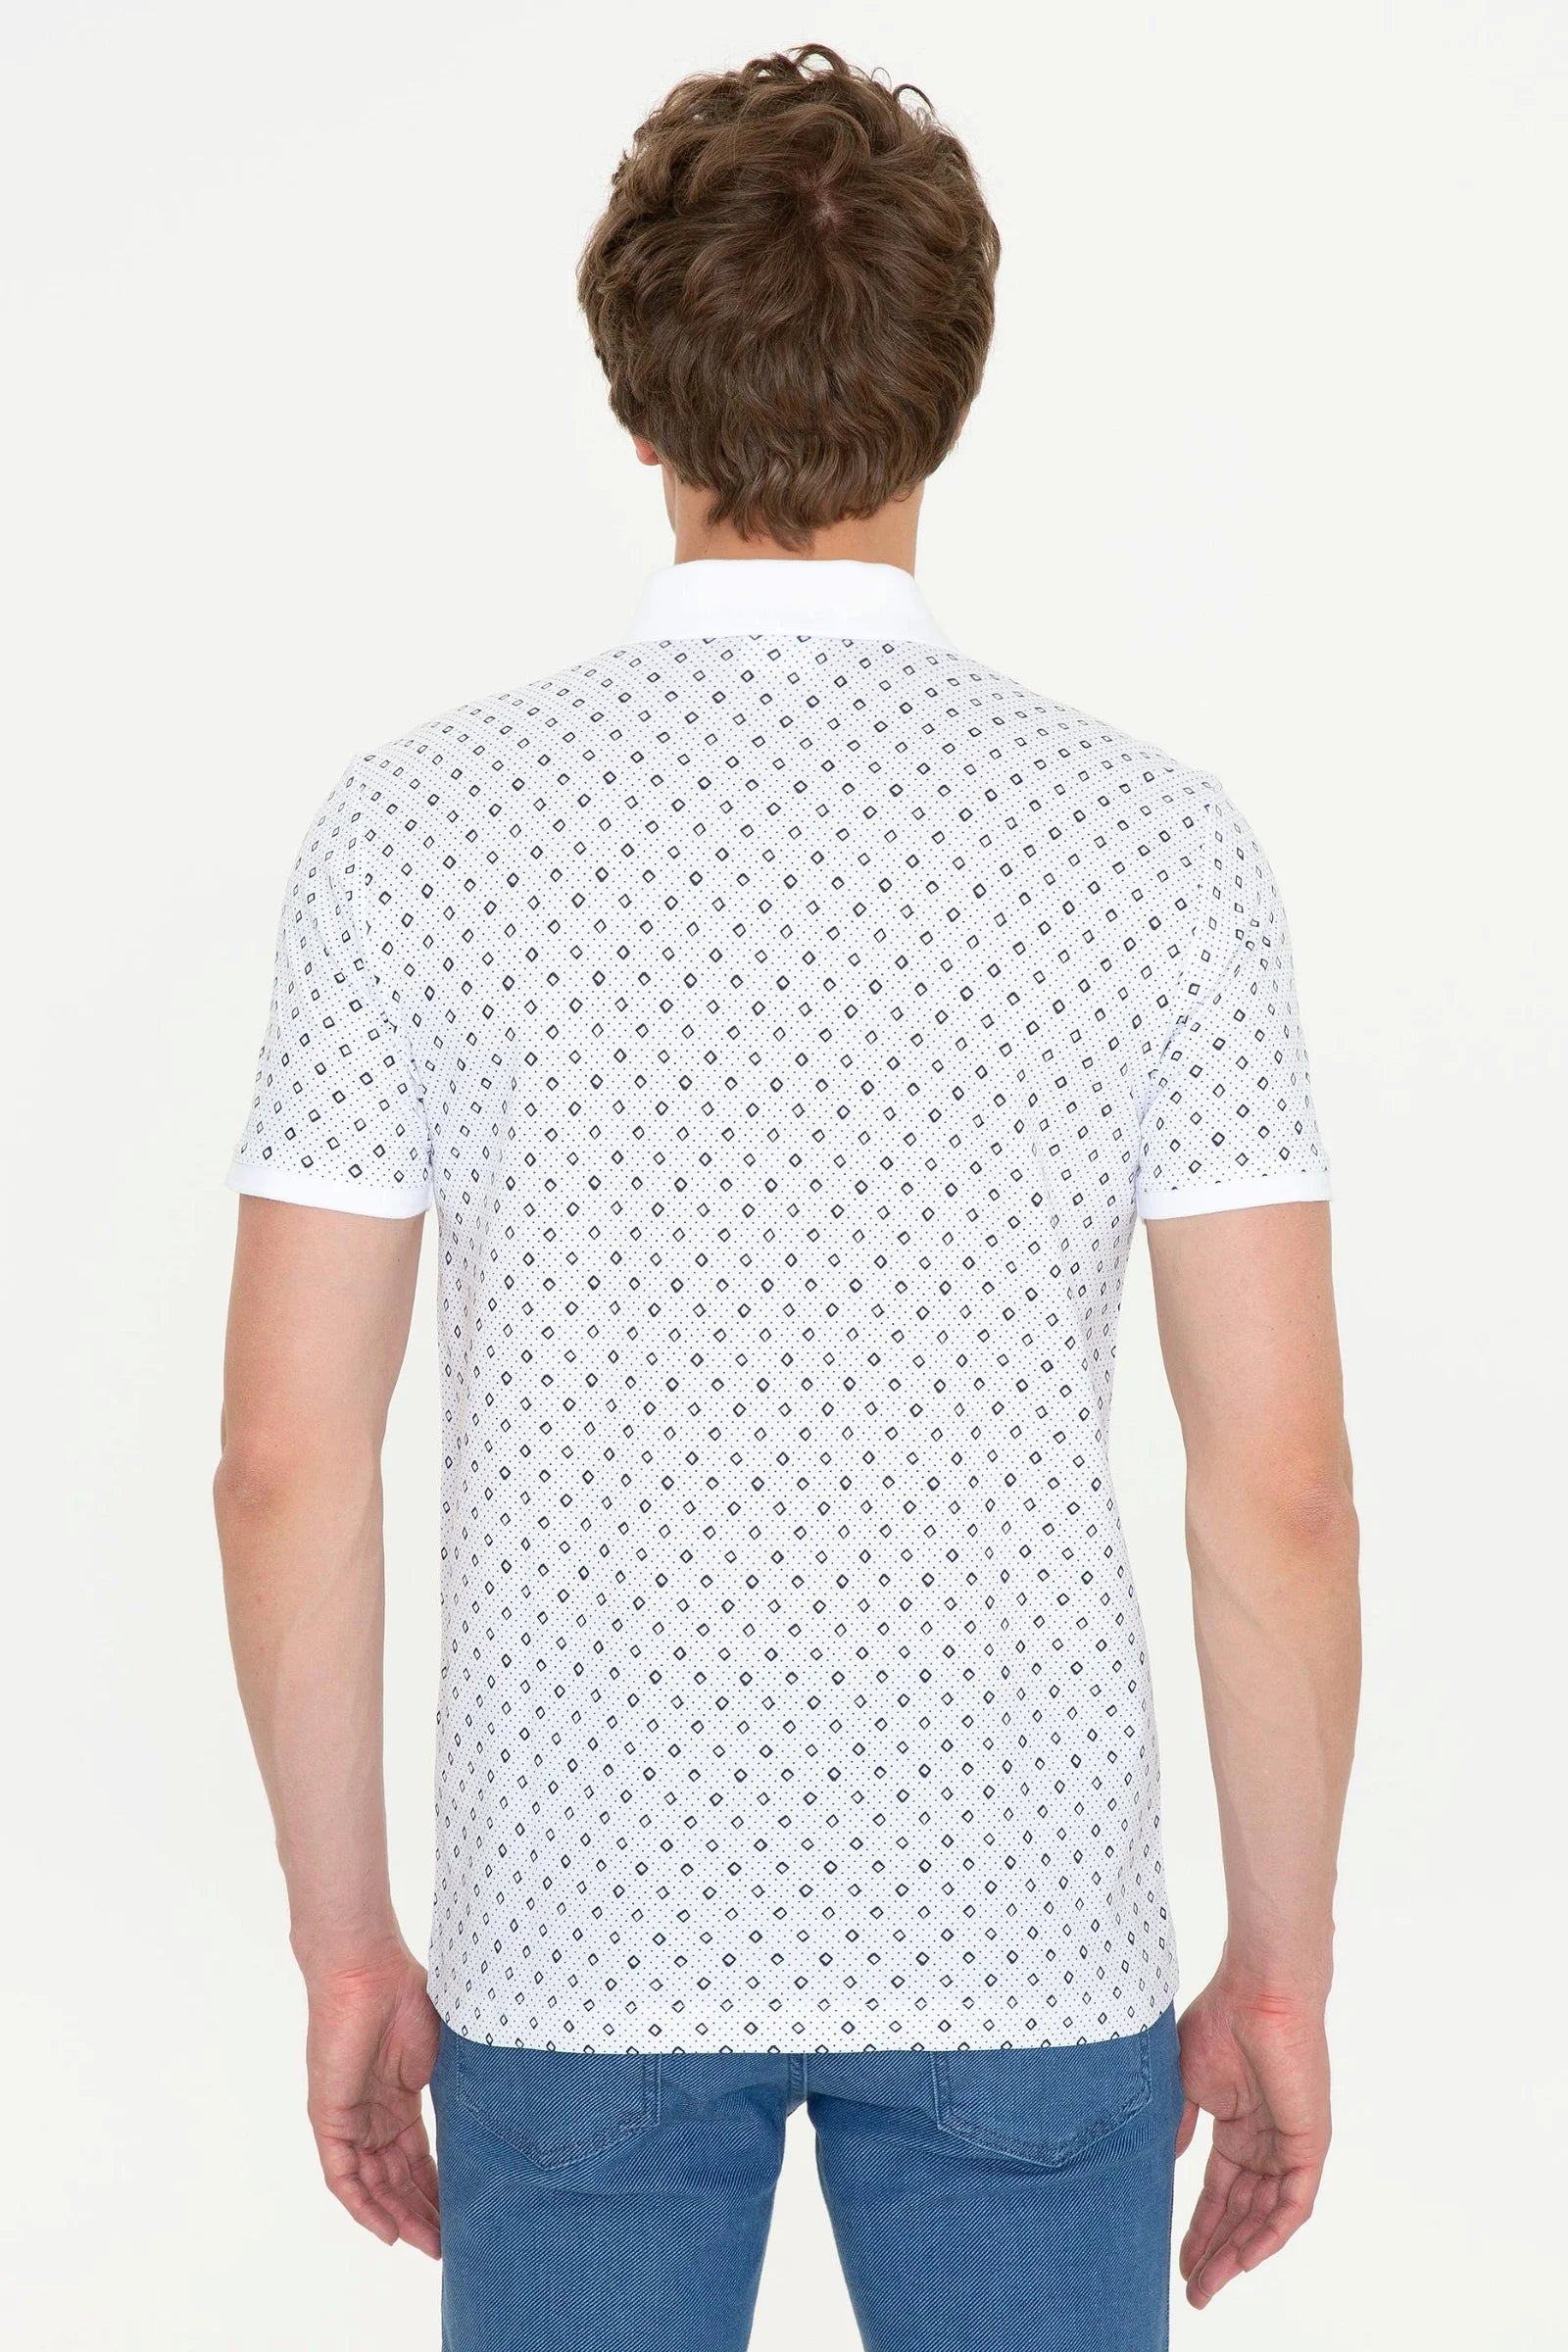 US Polo Assn. Printed Small Dots Pattern Polo Neck T-Shirt - Men